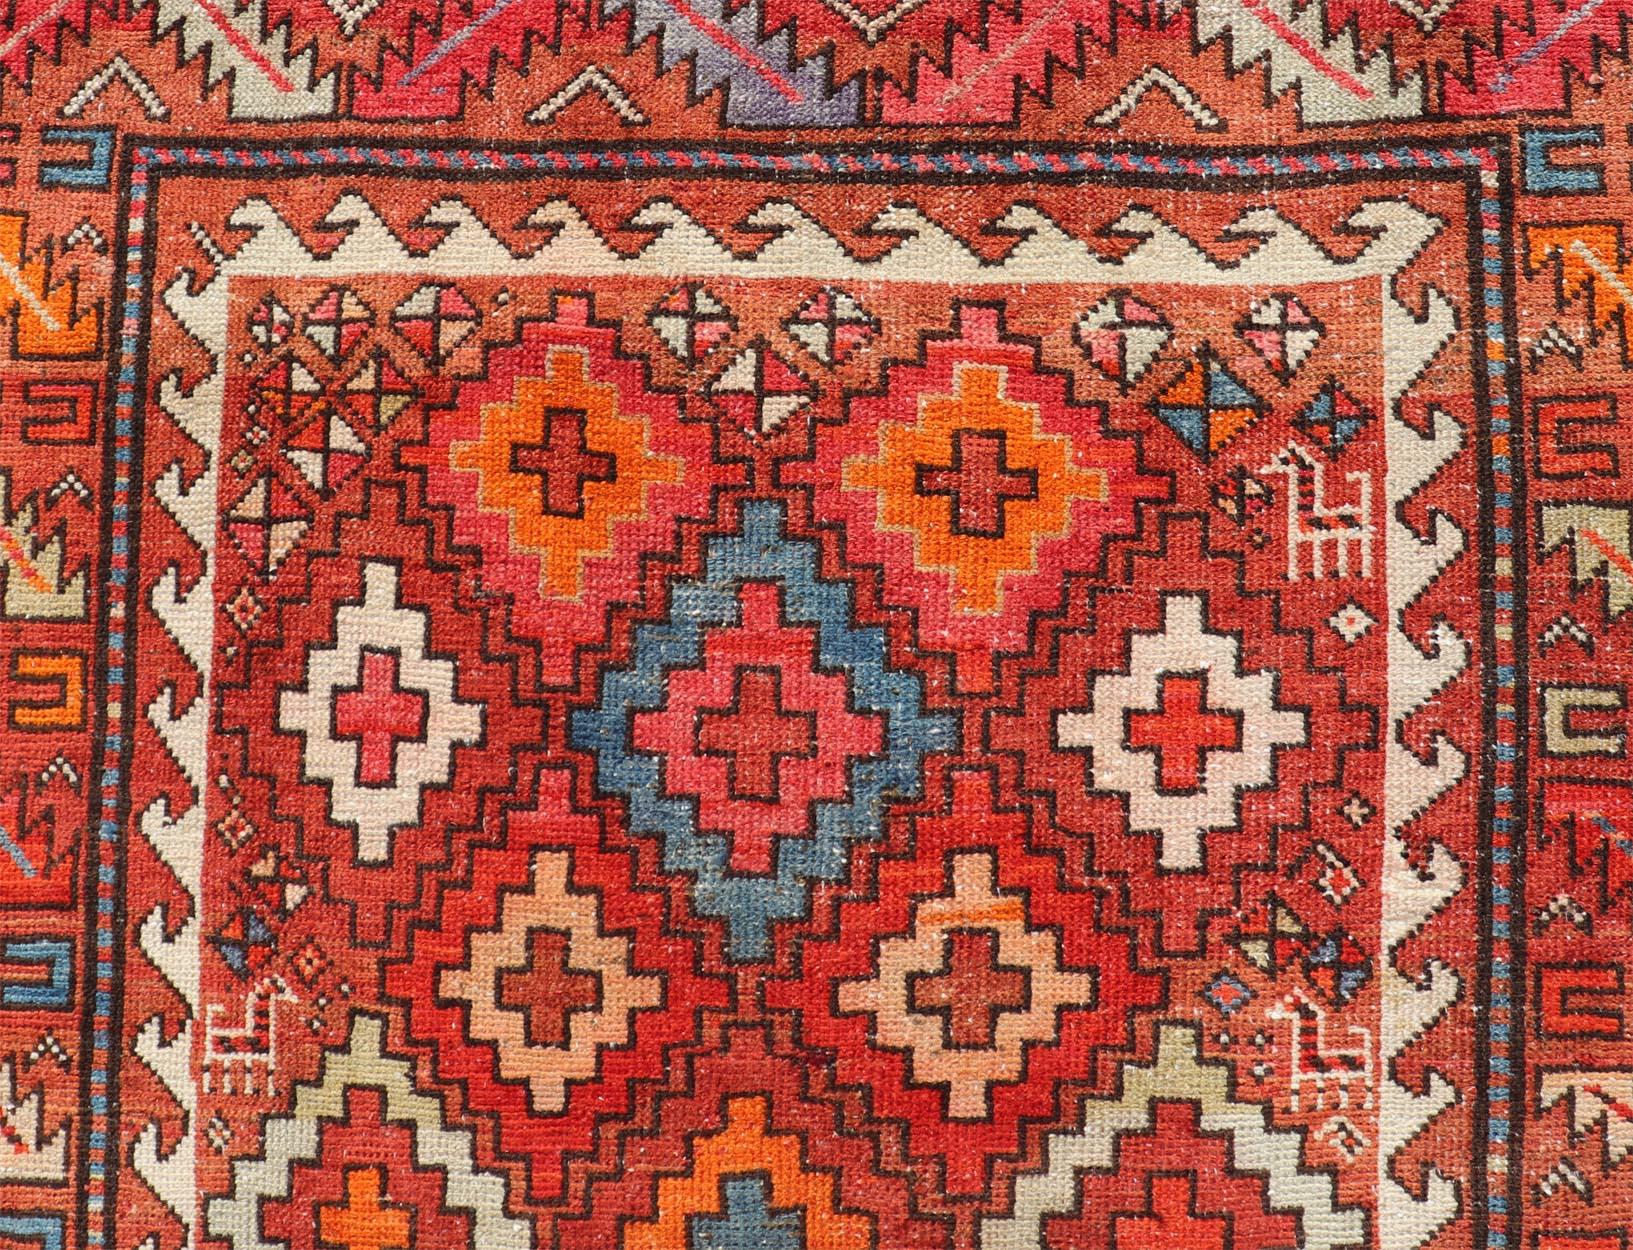 Antique Persian Fine Weave Hamadan Gallery Rug in Multi Colors in Tribal Design For Sale 1